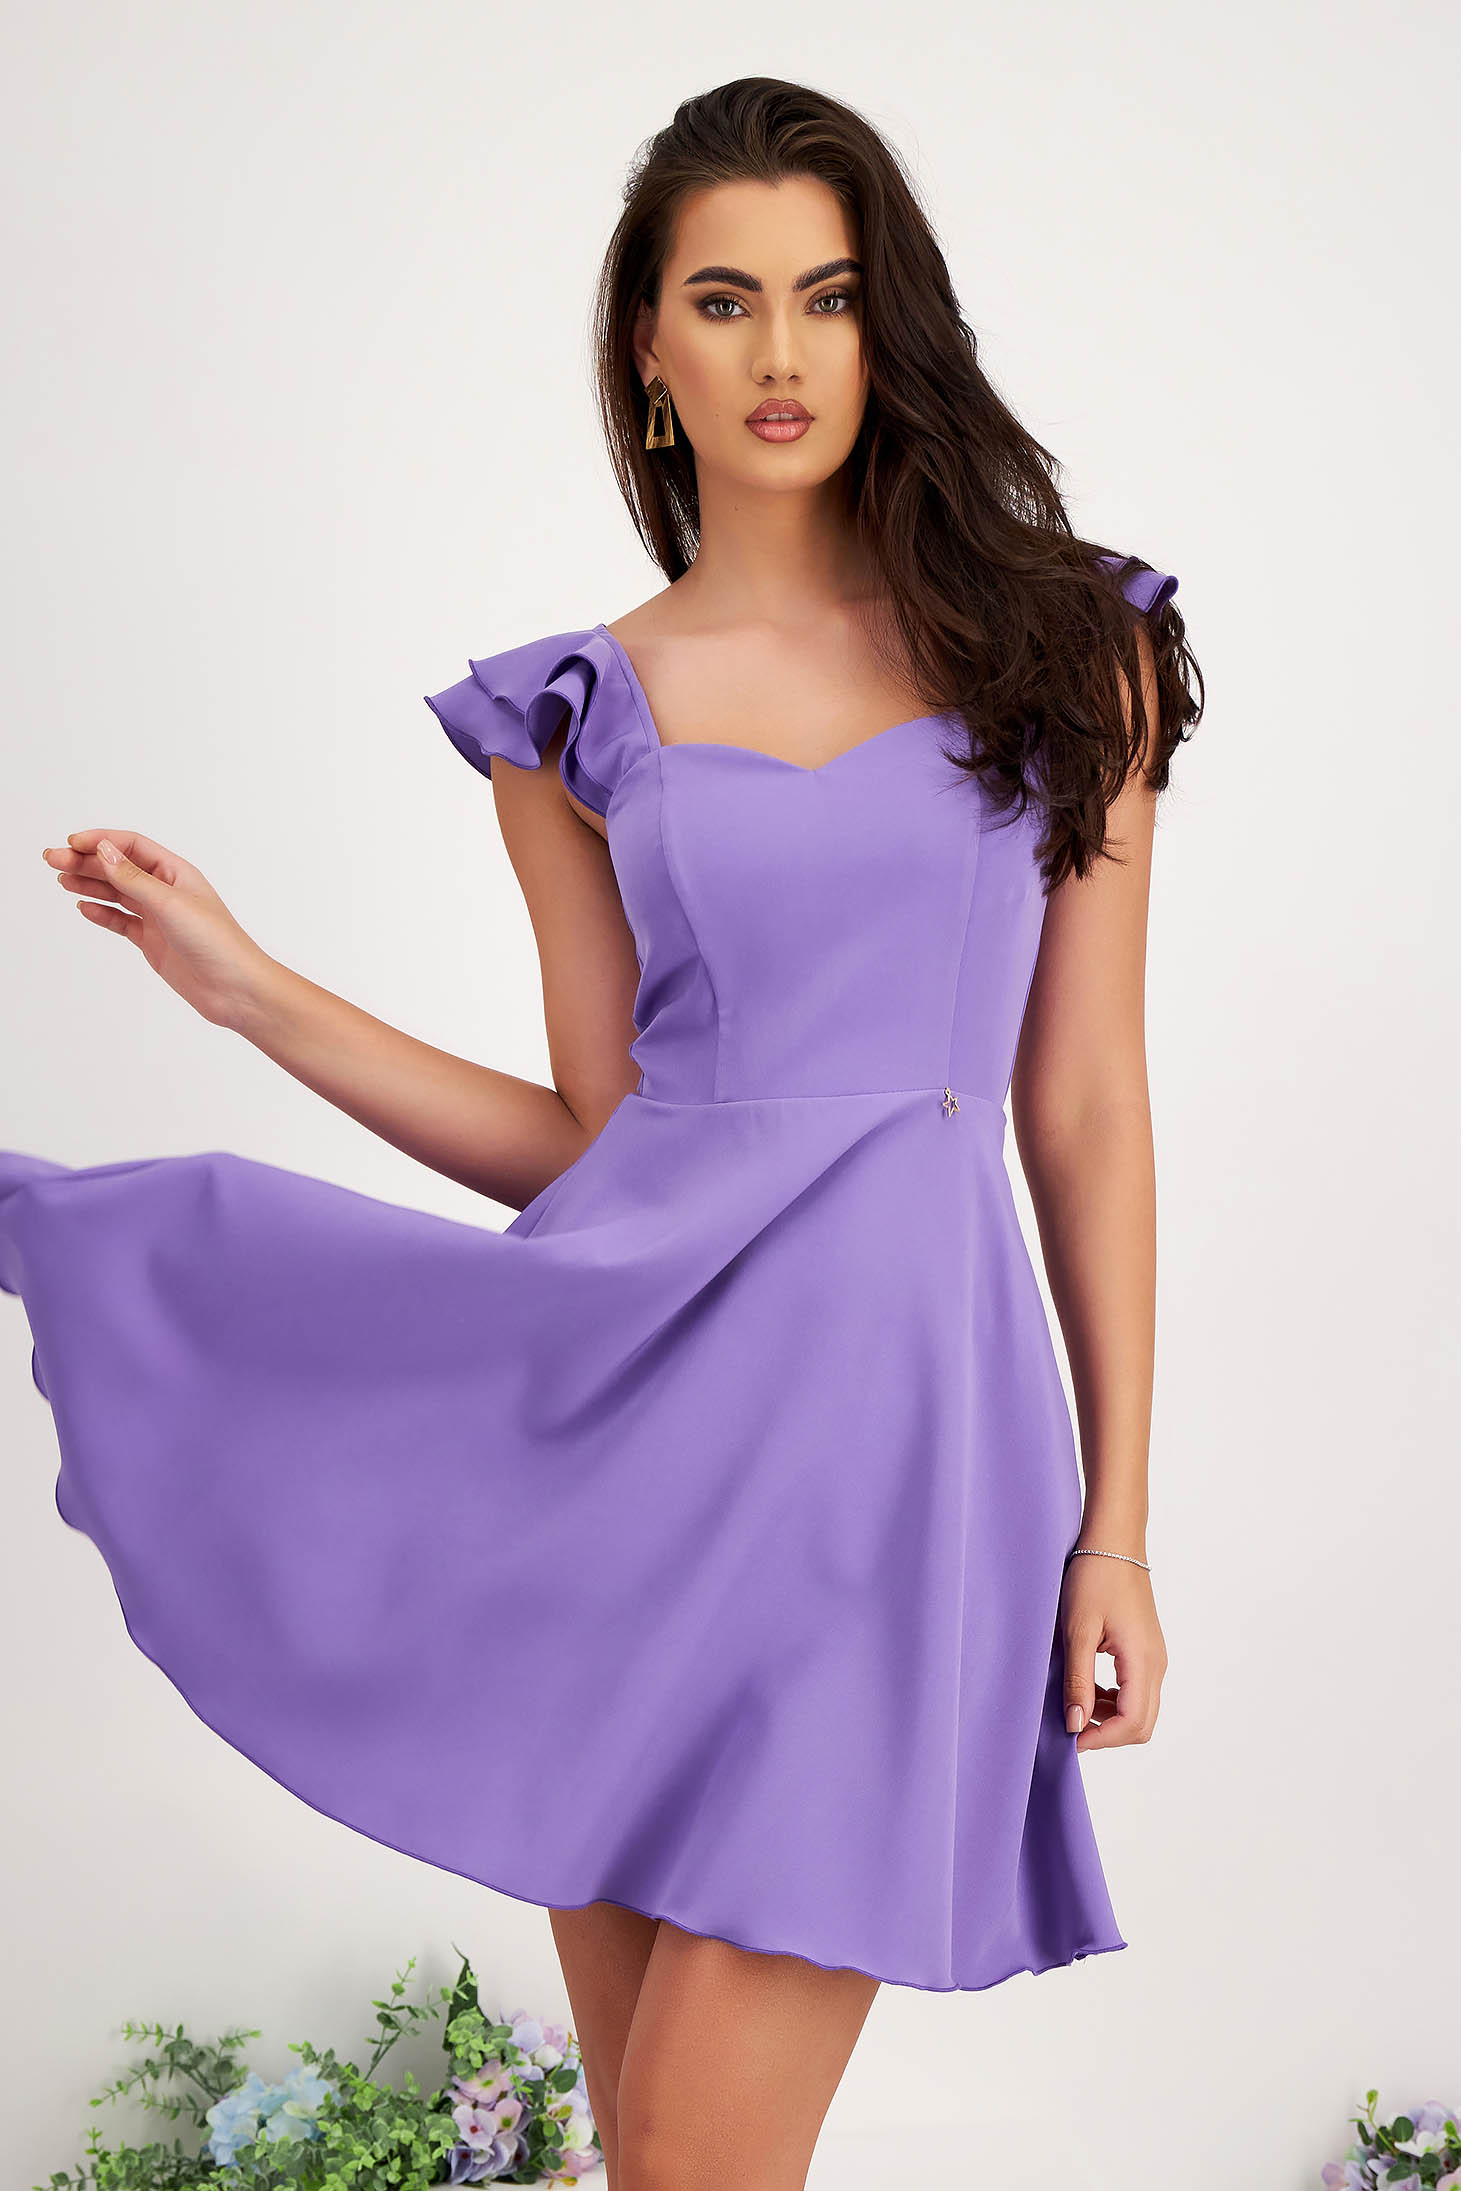 Dress - StarShinerS purple short cut cloth with ruffle details thin fabric cloche